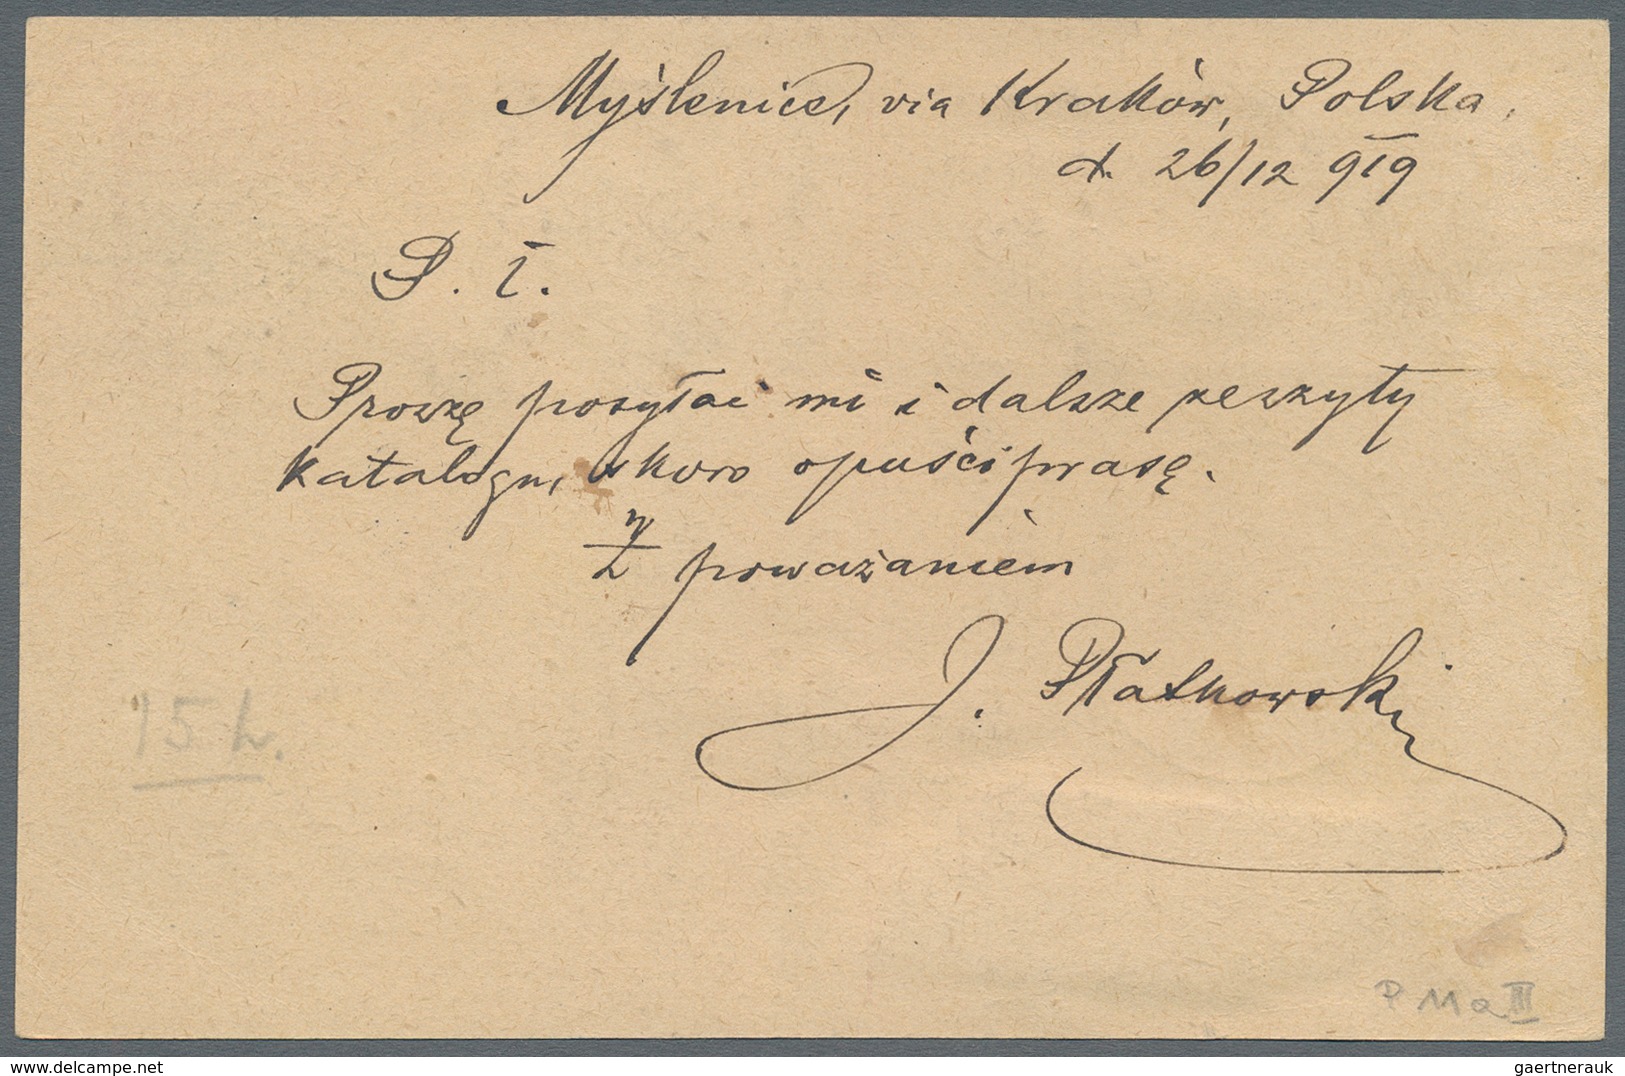 Polen - Ganzsachen: 1919 Uprated Postal Stationery Card Sent By Registered Mail From Myslenice To Zu - Stamped Stationery